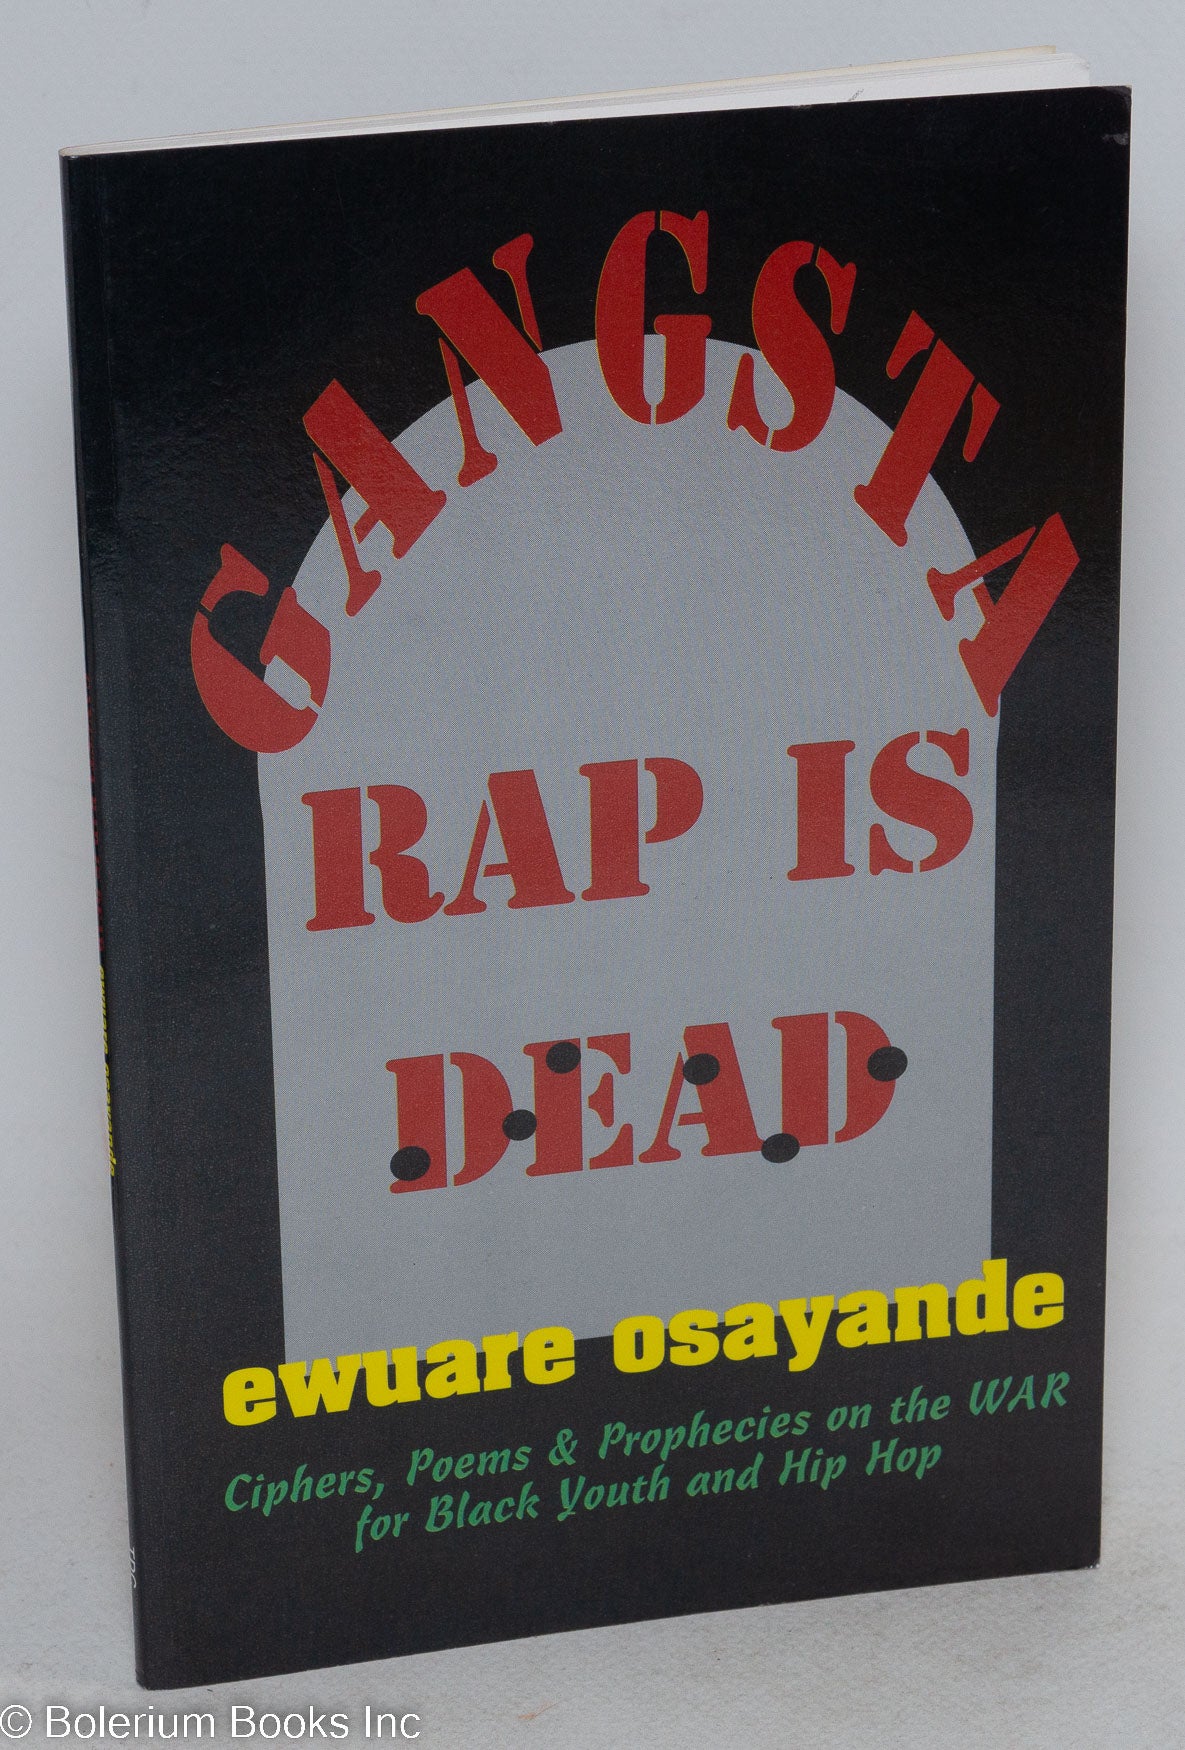 gangsta rap coloring book pdf